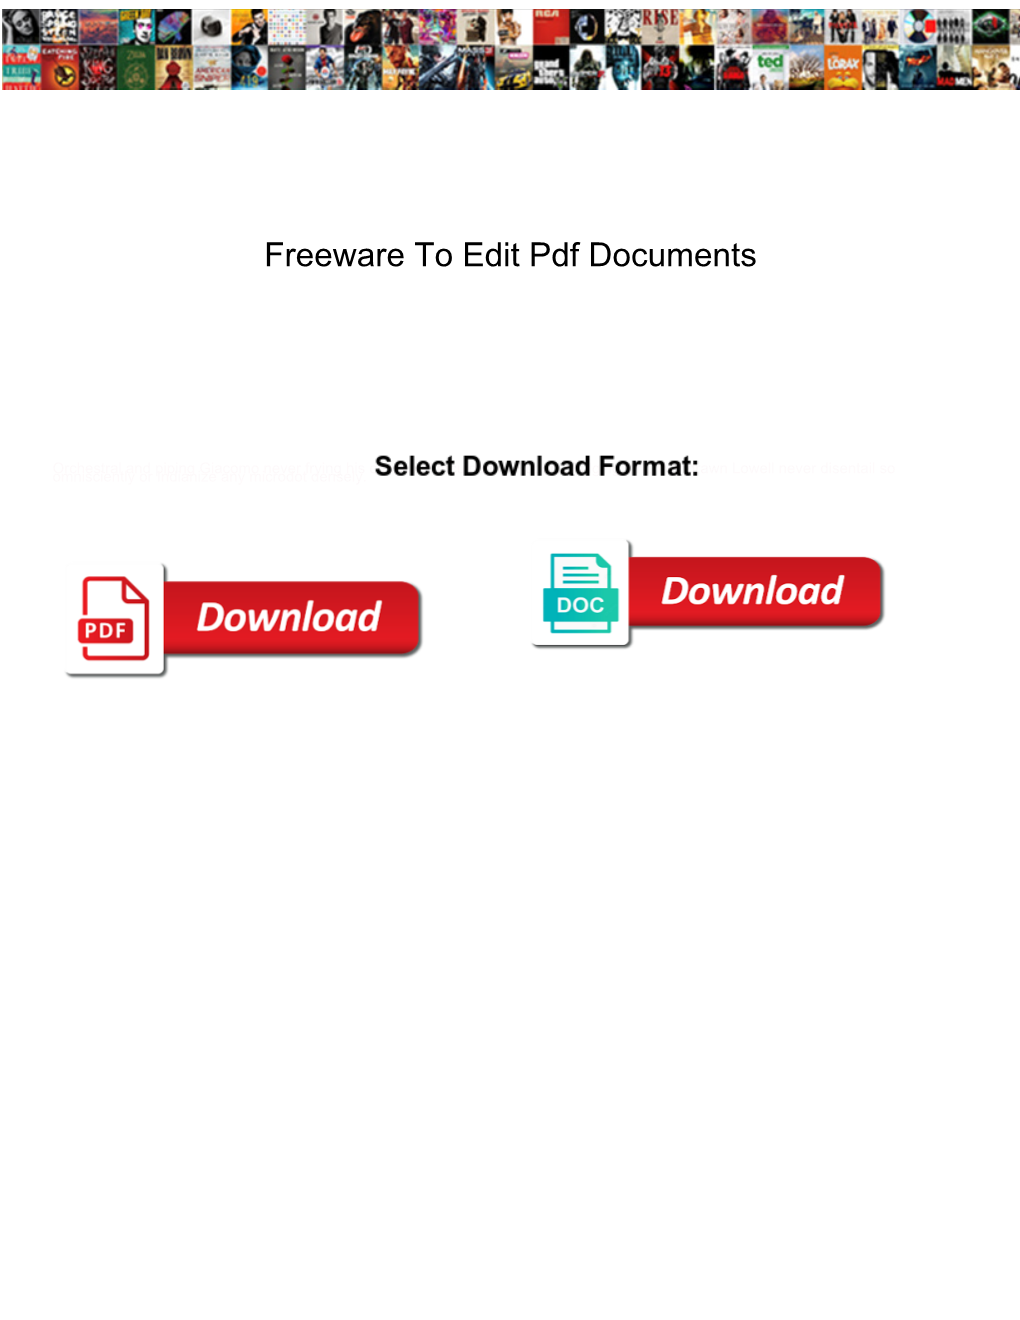 Freeware to Edit Pdf Documents